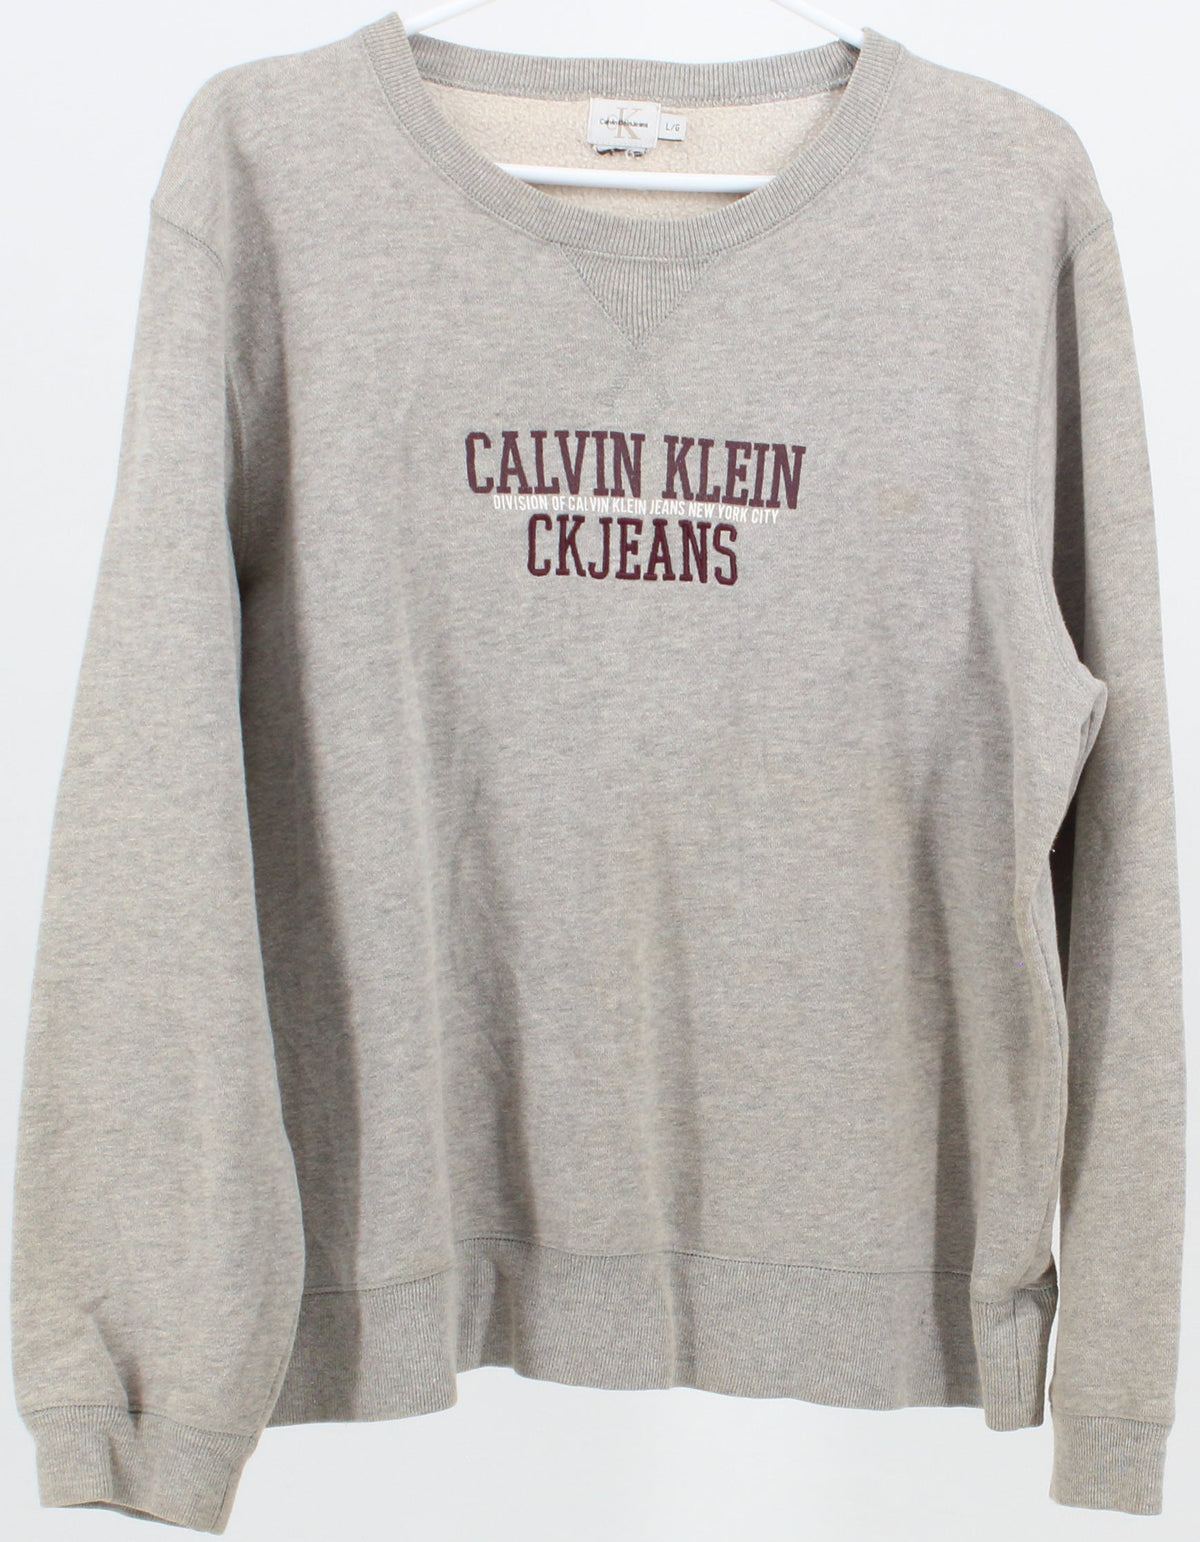 Calvin Klein CK Jeans Grey Sweatshirt